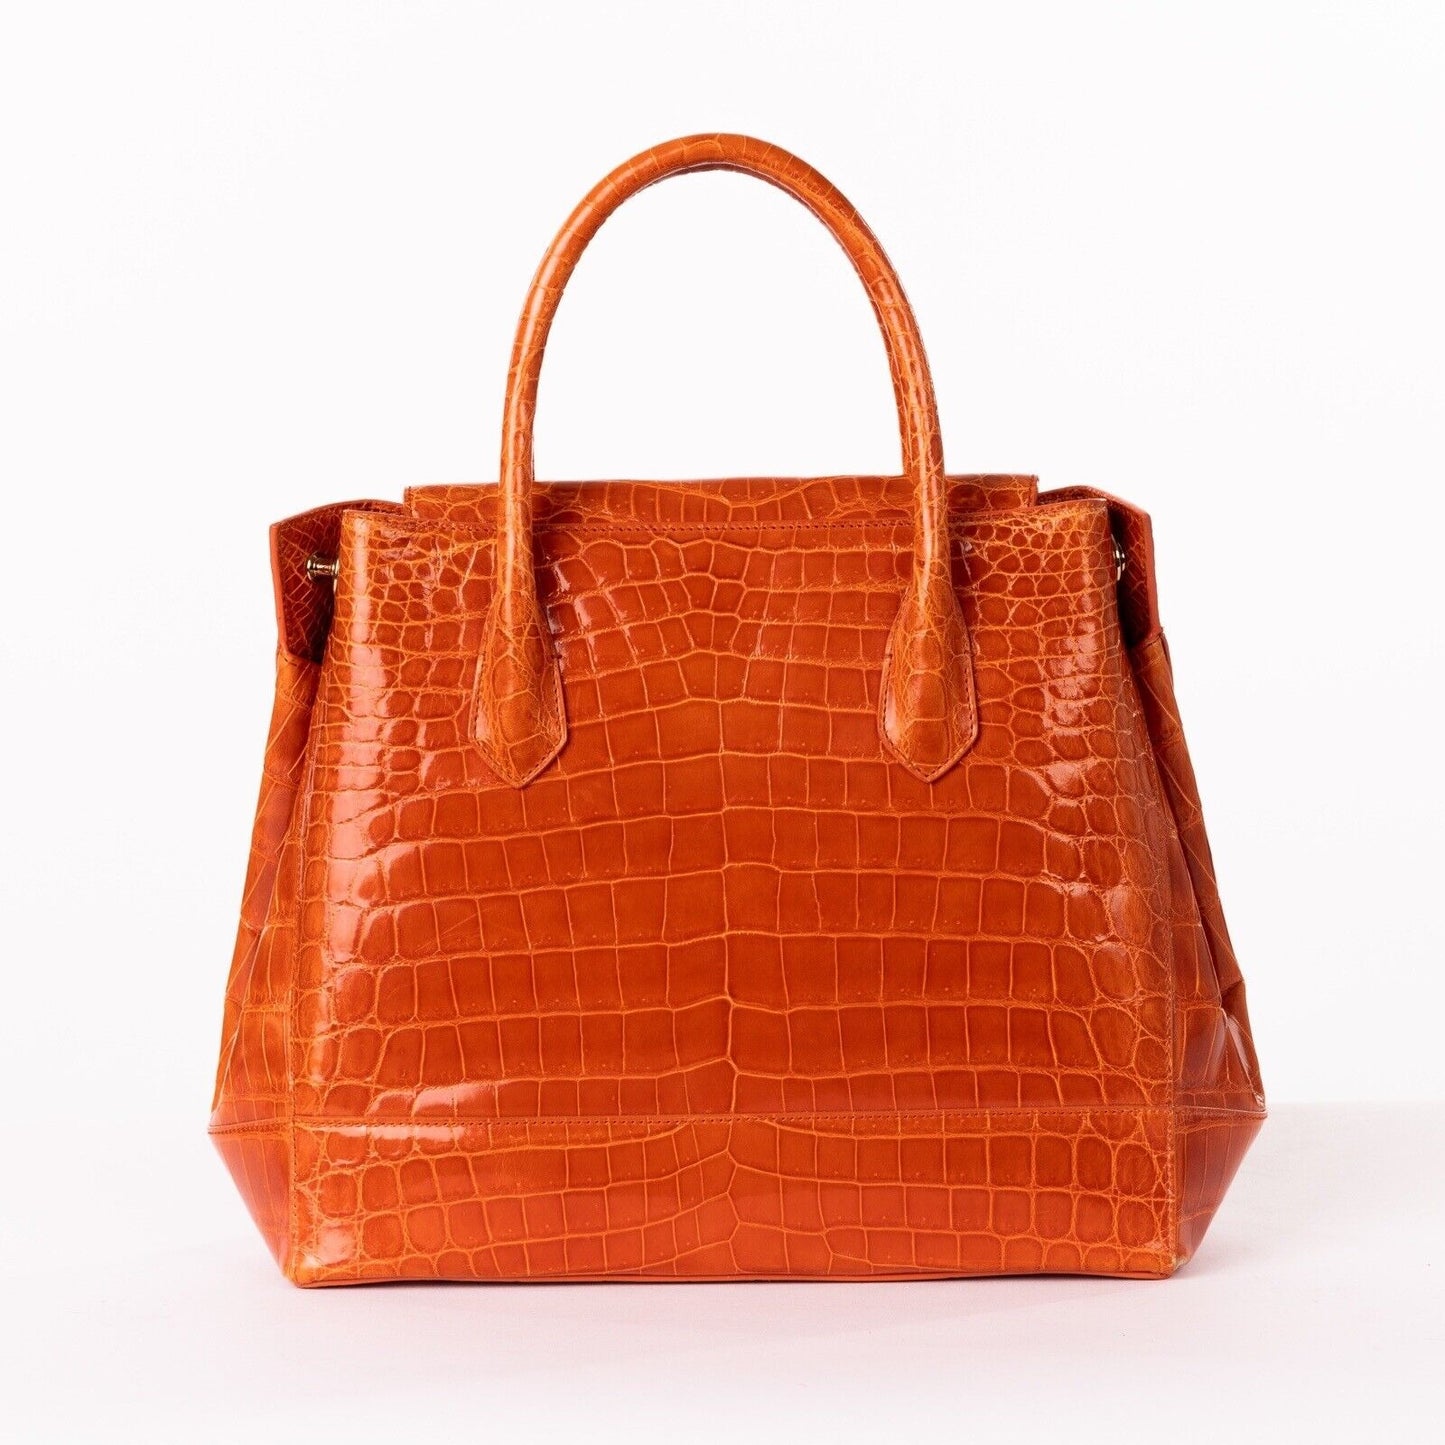 Rear View Of Orange Handbag